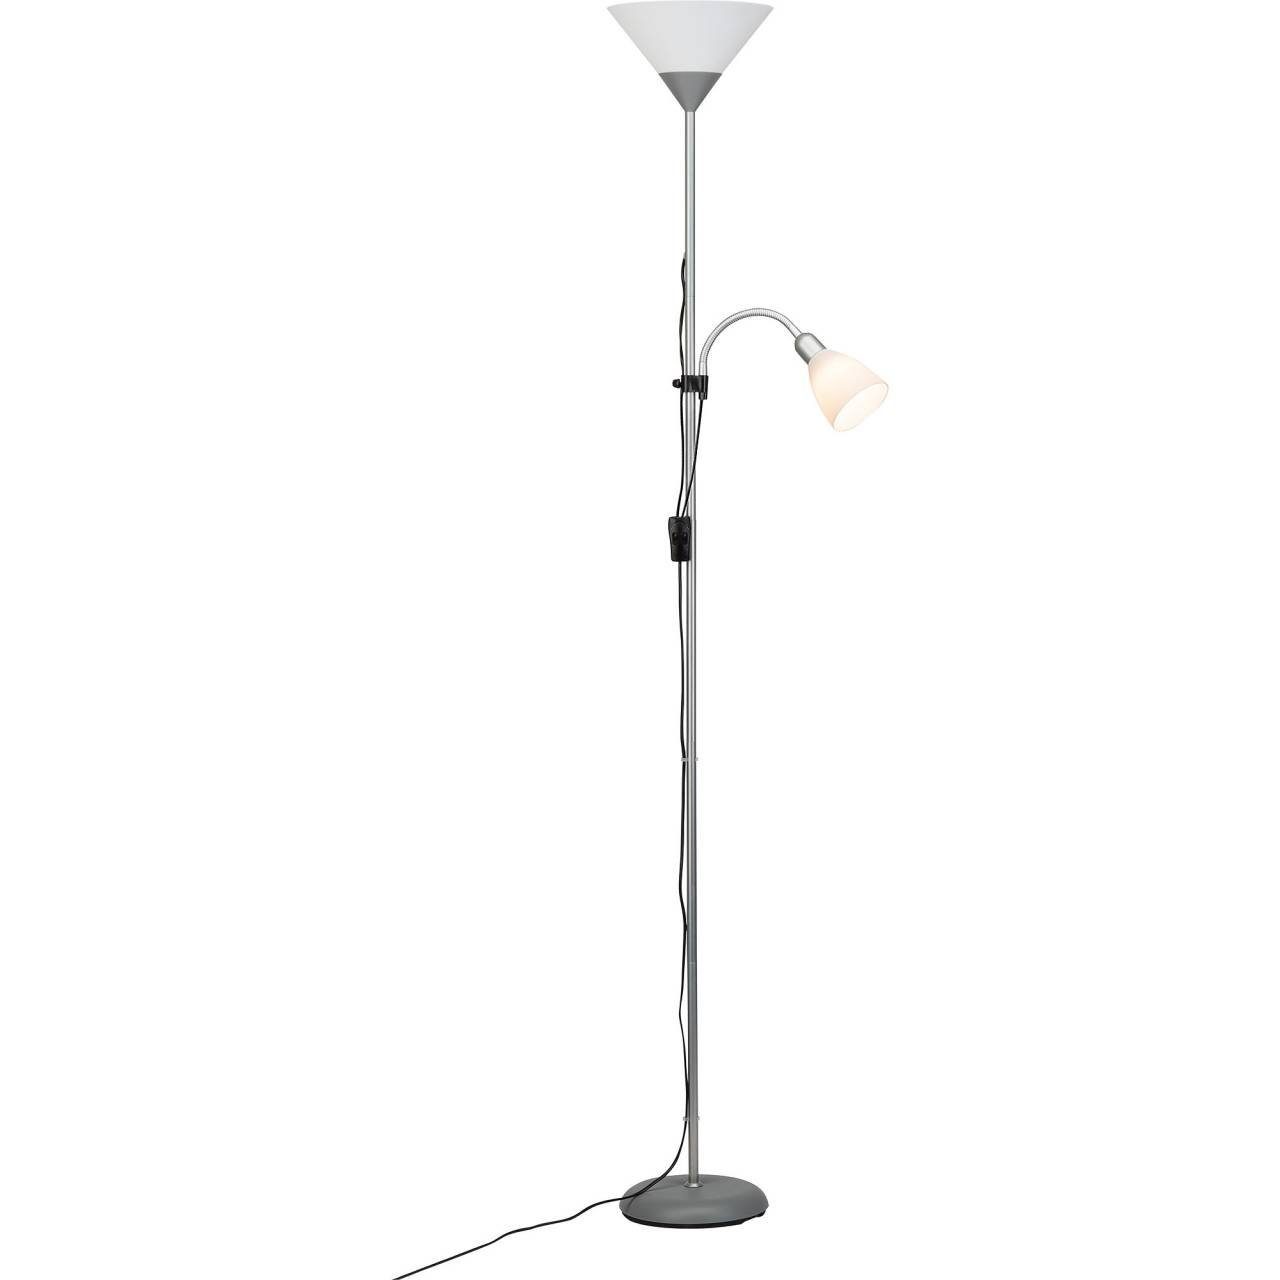 Brilliant Stehlampe Spari, 2700K, Lampe LED-A60, silber/weiß Deckenfluter 9. E27, Spari 1x LED Lesearm